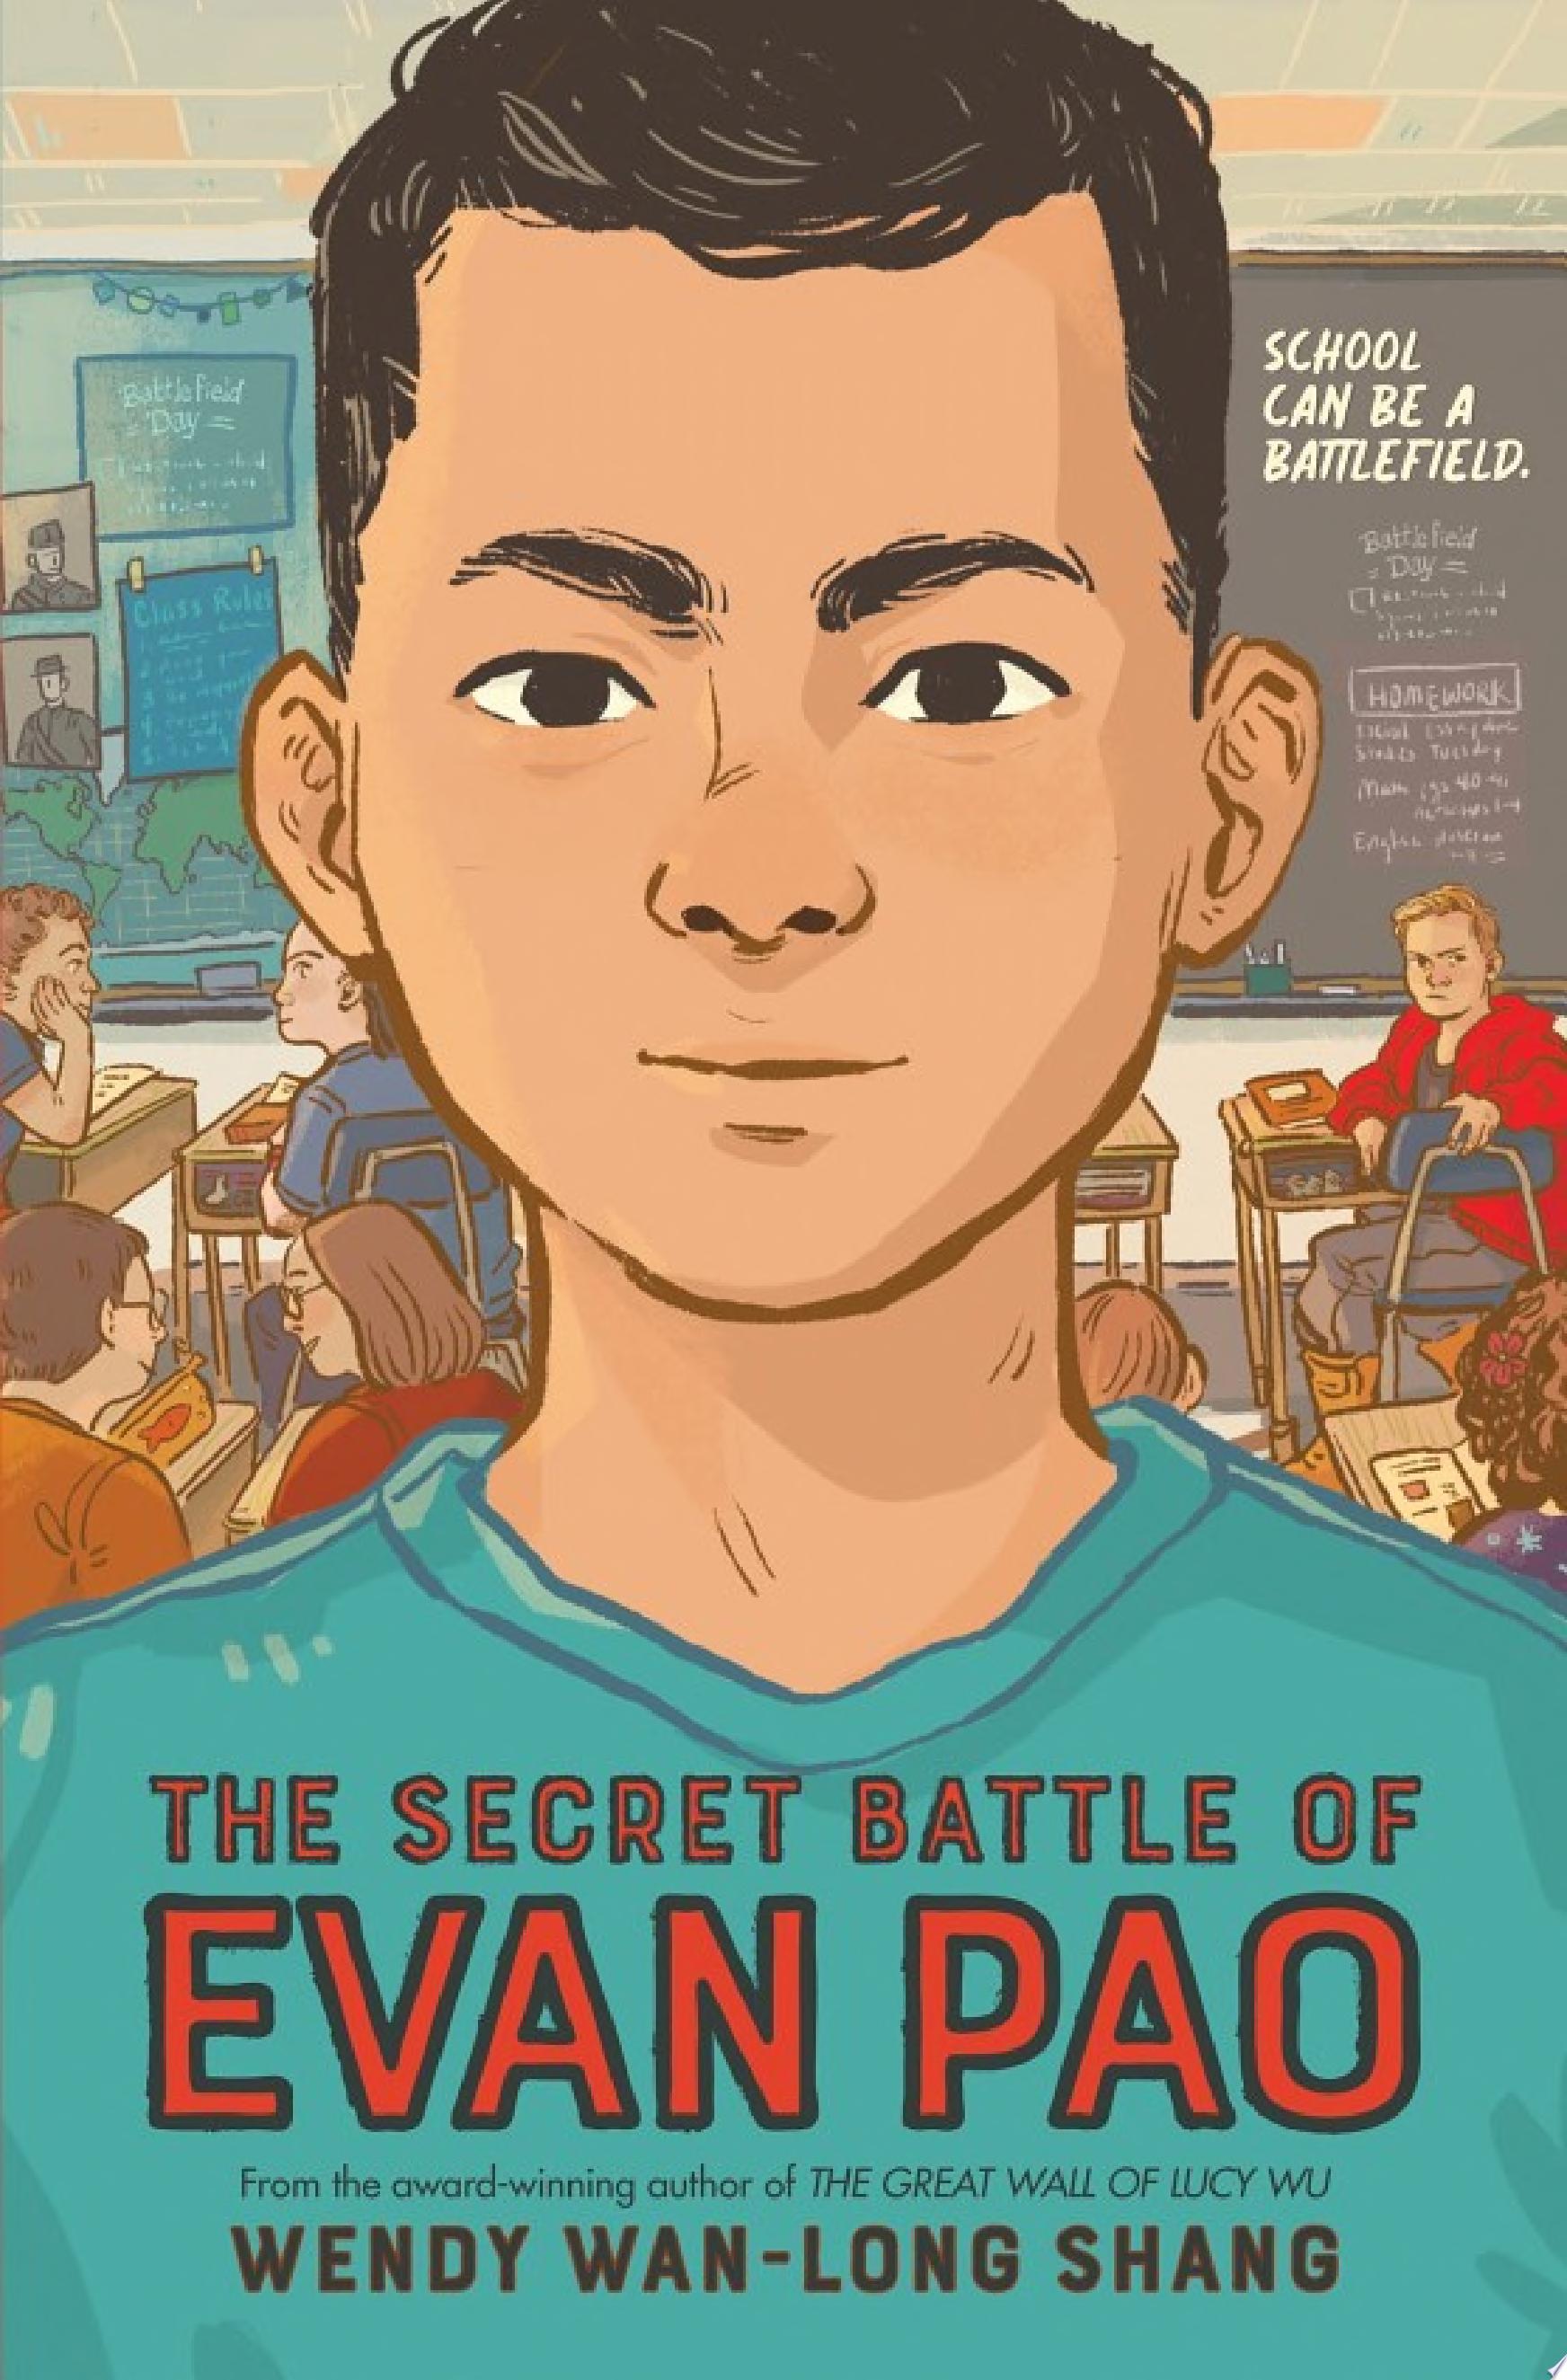 Battle Storm: An Unofficial Novel of Fortnite (Battle Royale: Secrets of  the Island) (Paperback)